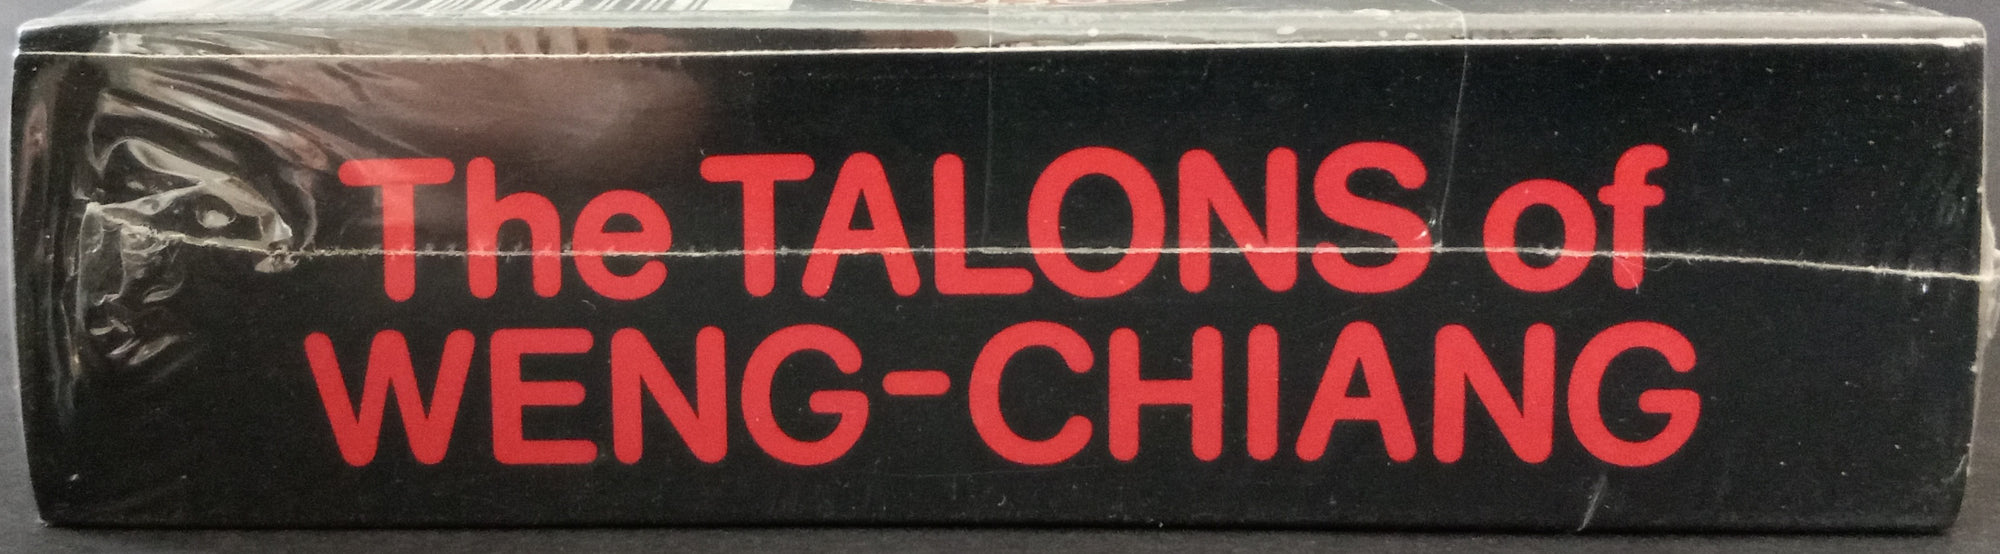 Dr-Who-Talons-Weng-Chiang-VHS-Baker